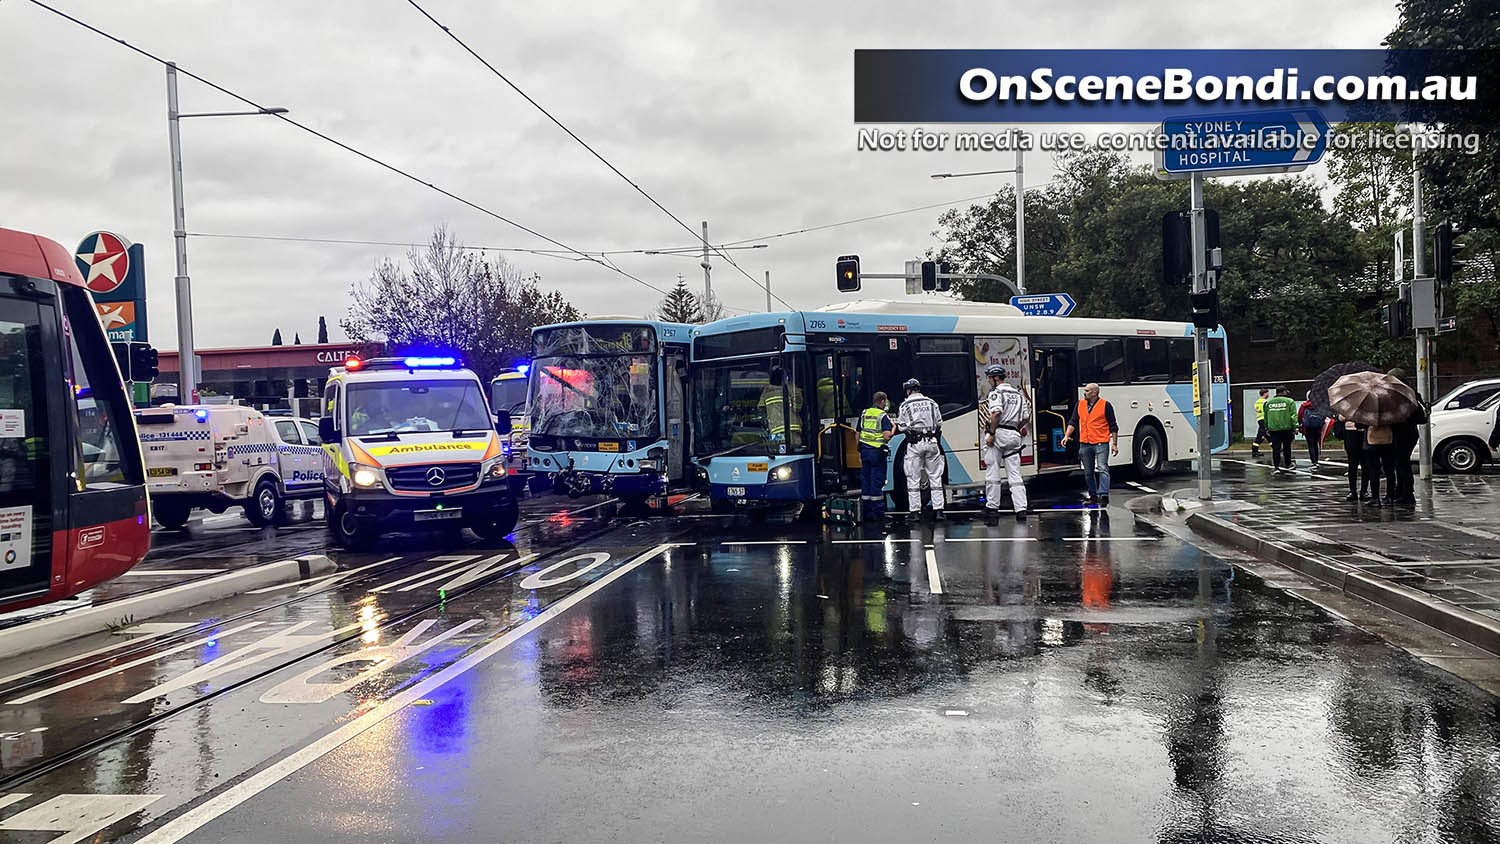 20200727 kensington bus crash 003